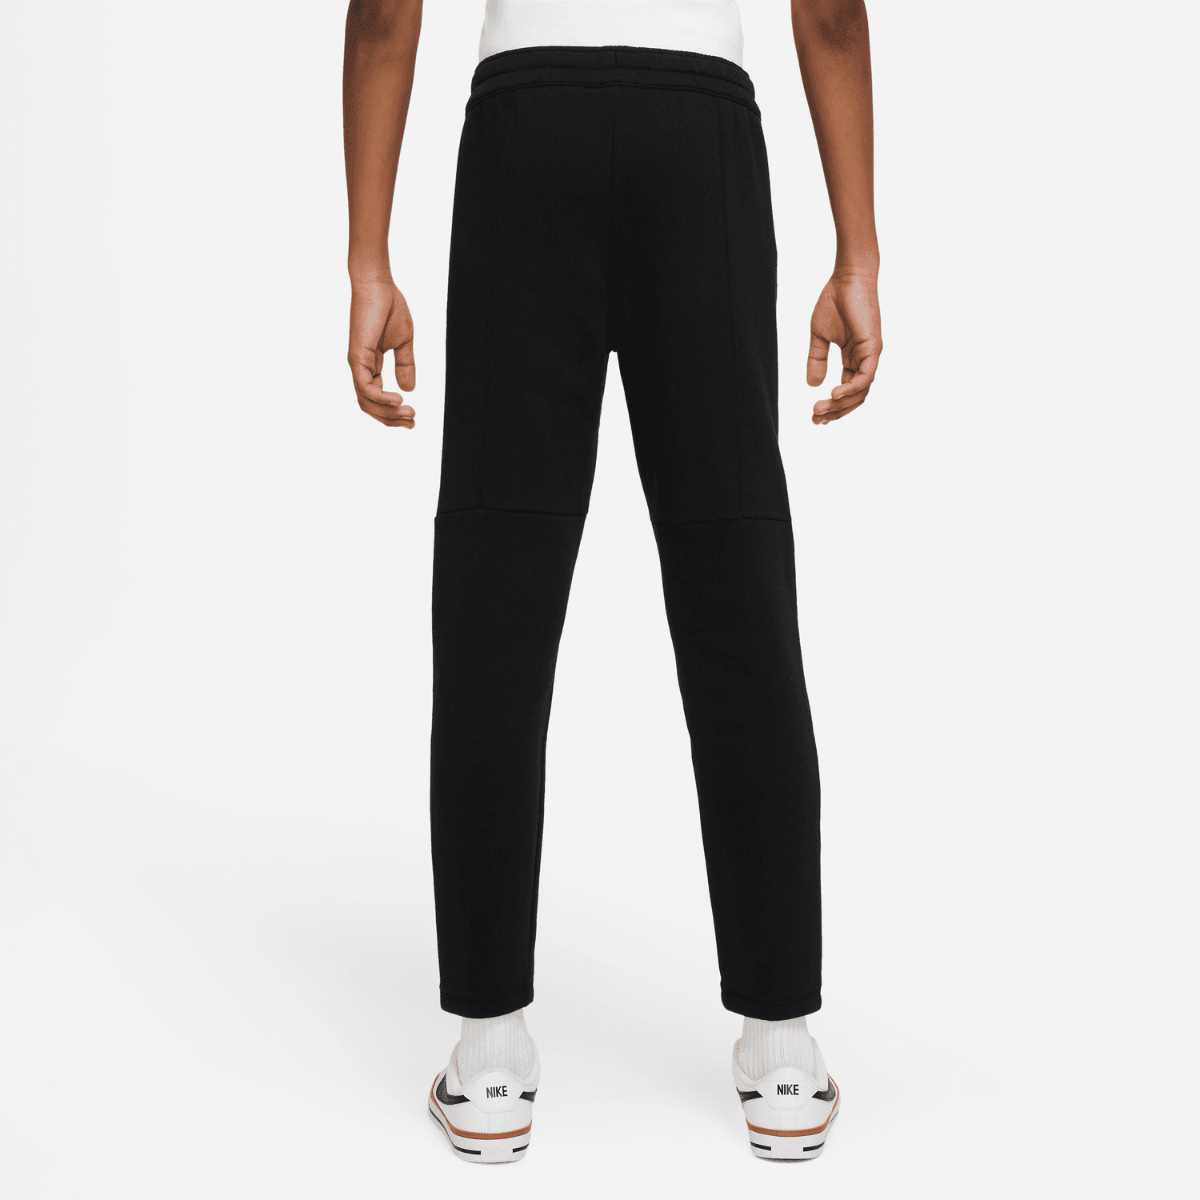 Pantaloni Nike Sportswear Amplify Junior - Nero/Bianco